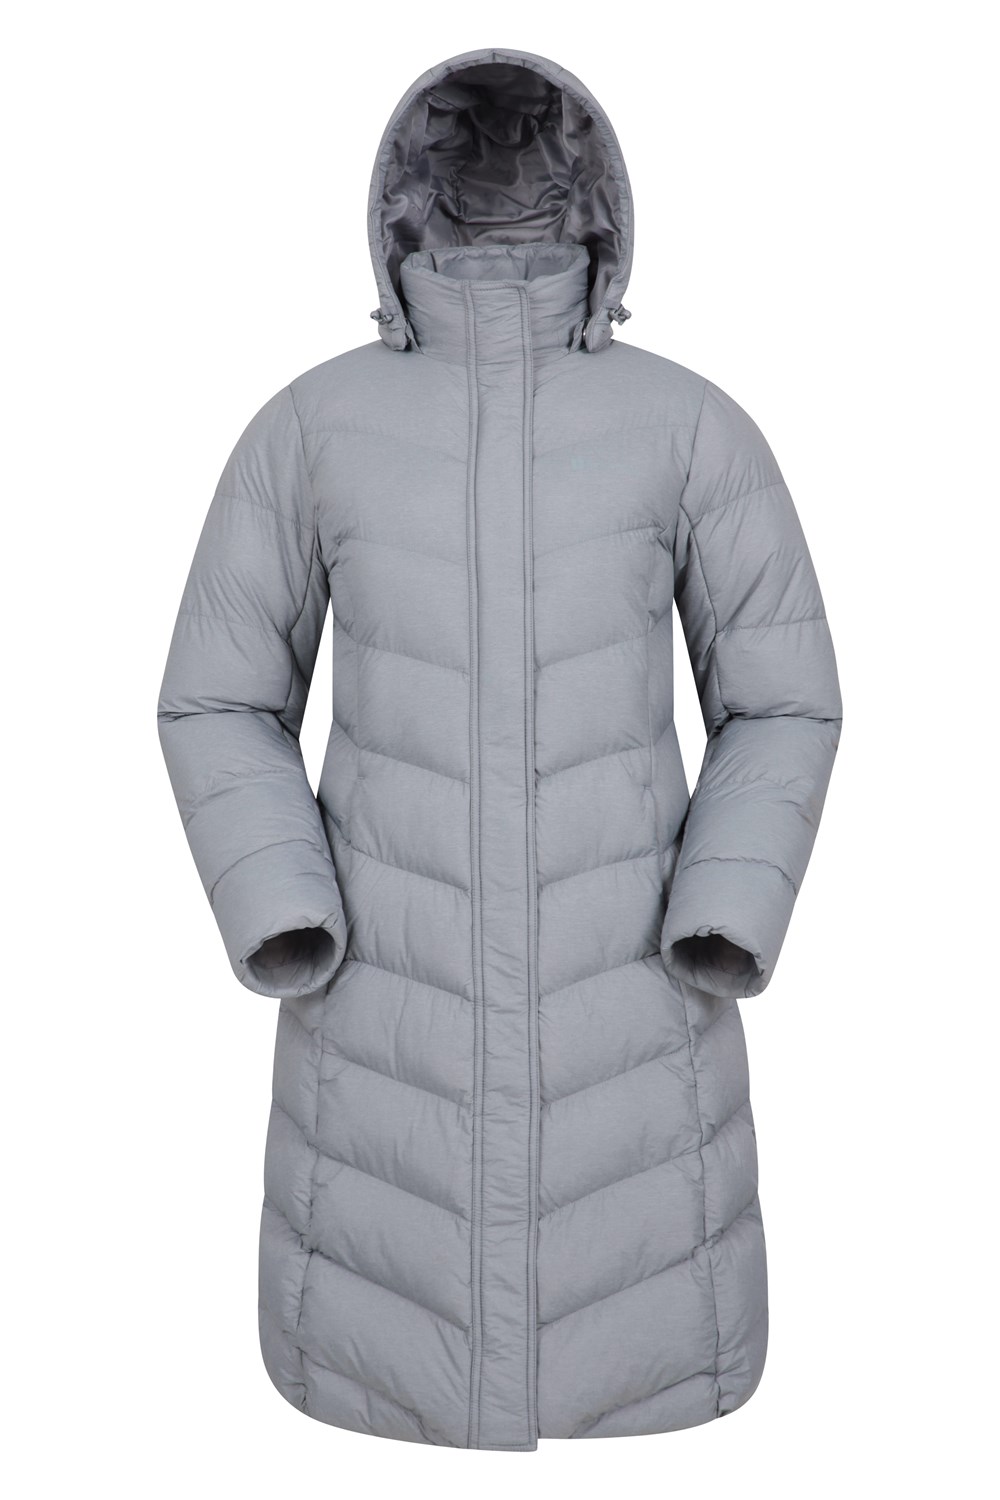 Mountain Warehouse Alexa Womens Padded Jacket Black Size UK 14 Lf075 PP ...